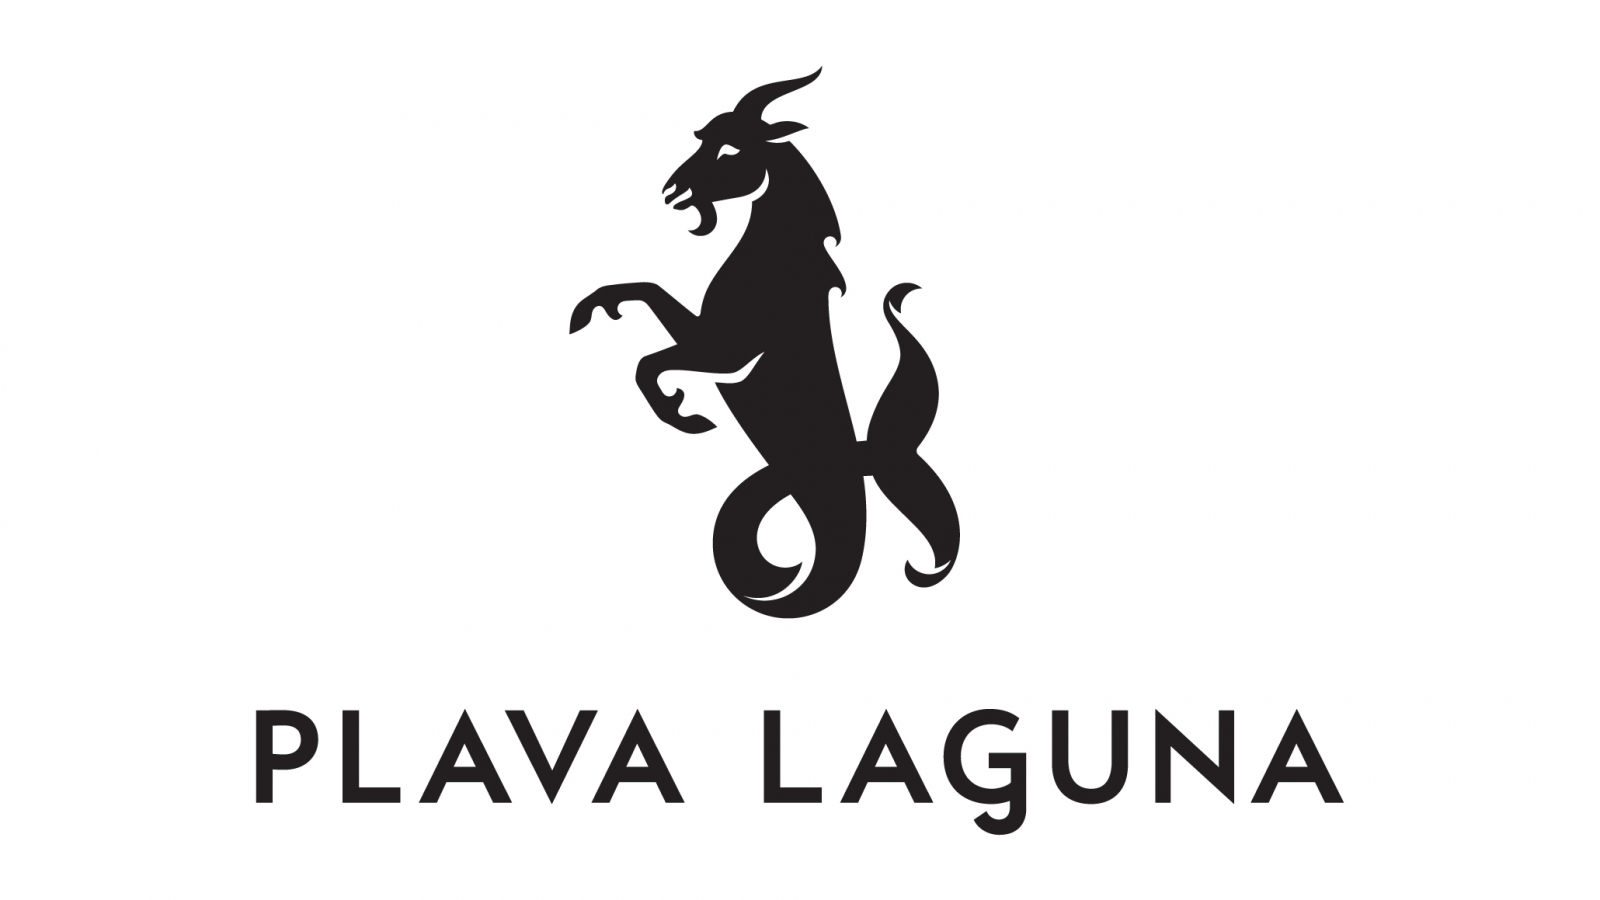 1a652a5ee15cb3ceb56352d4d72fc7ca_Plava-Laguna-Logo-1600-900-c-100